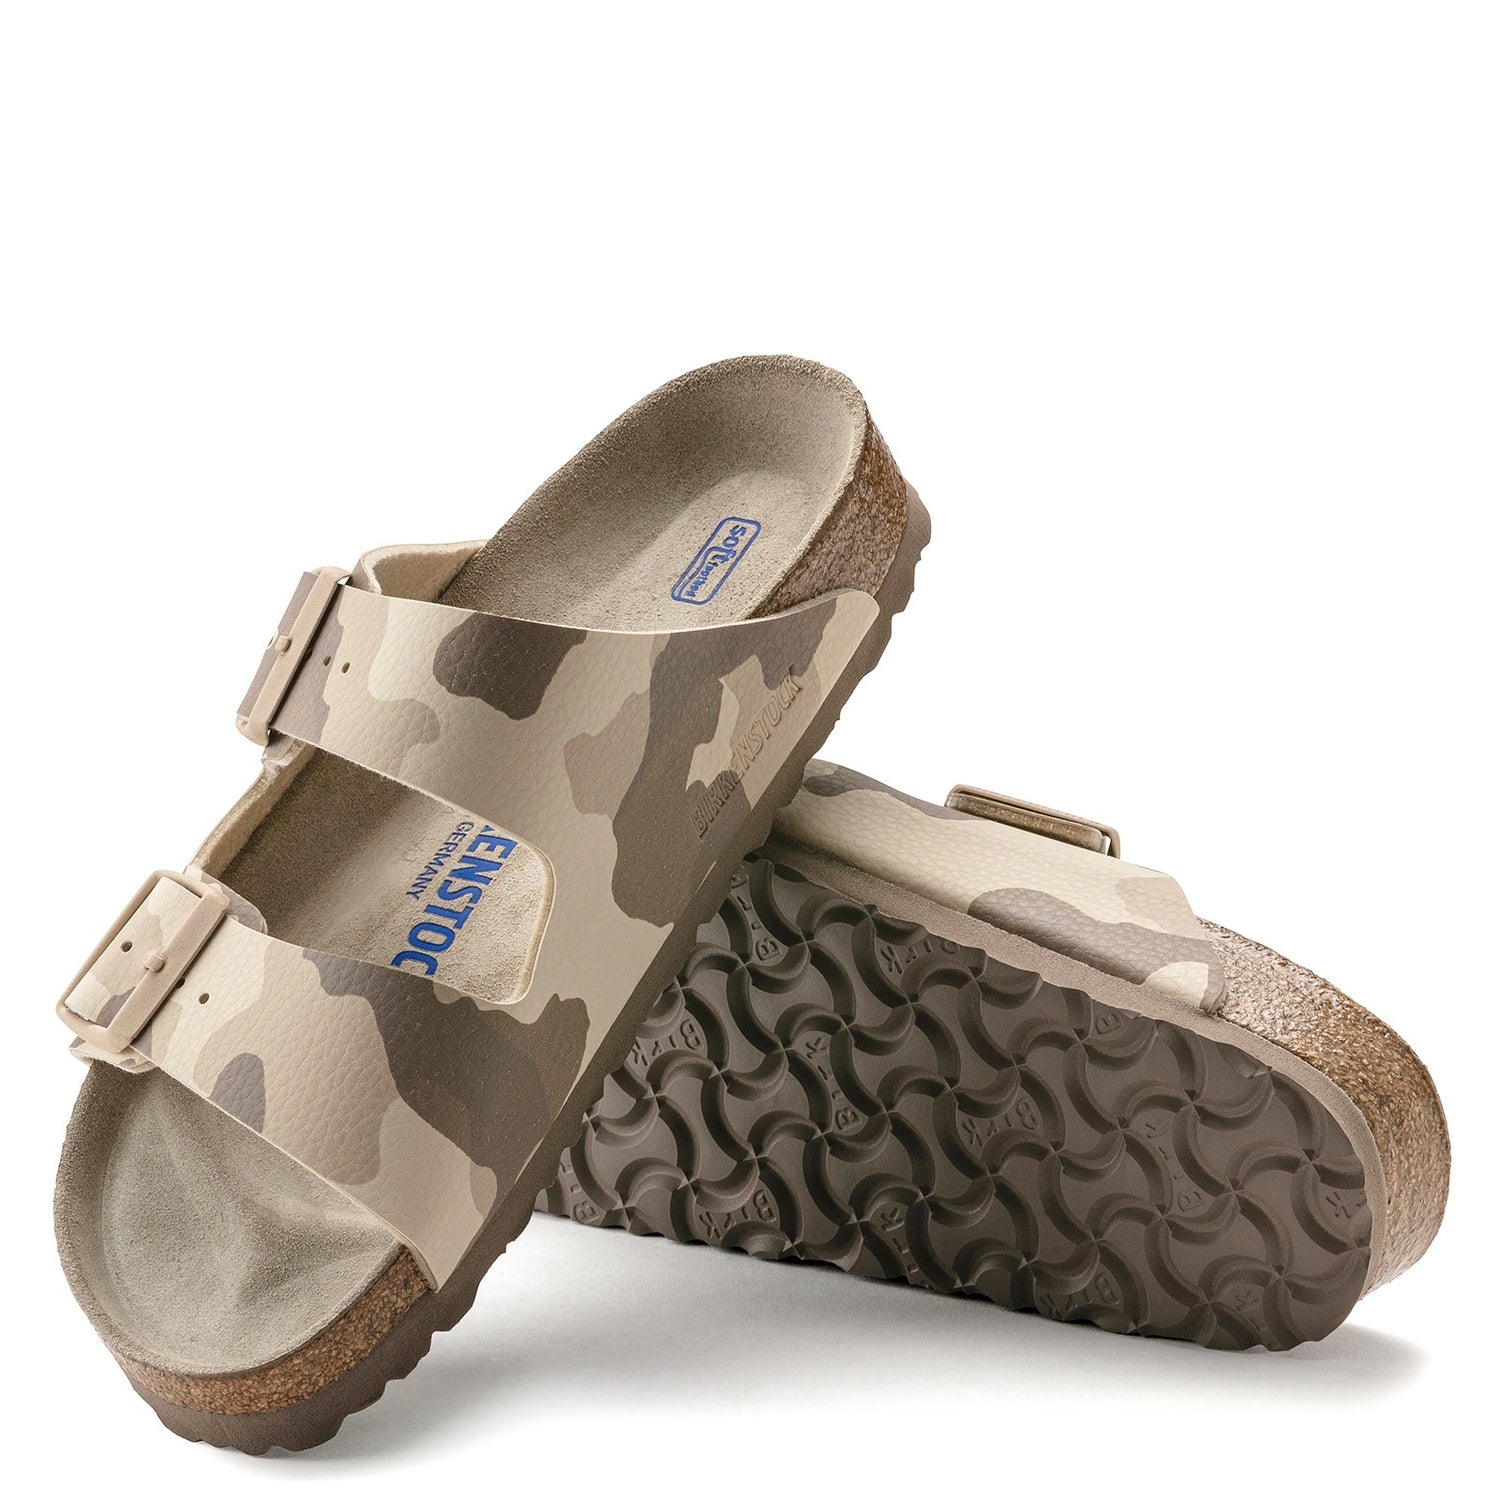 Peltz Shoes  Women's Birkenstock Arizona Slide Sandal - Narrow Width GREY CAMO 1022 860 N